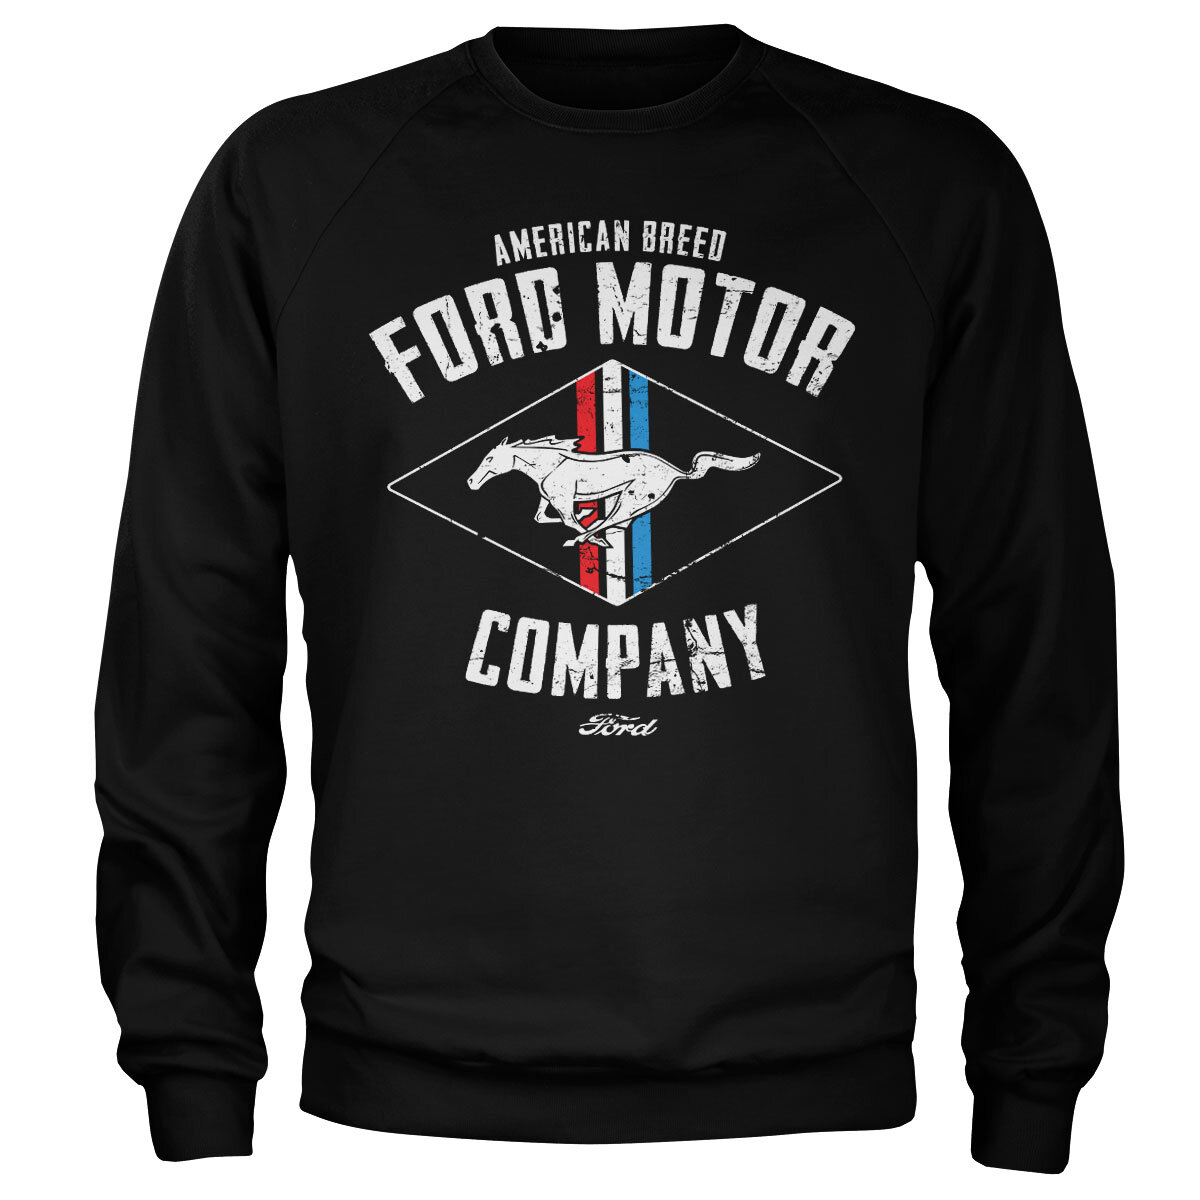 Ford Motor - American Breed Sweatshirt